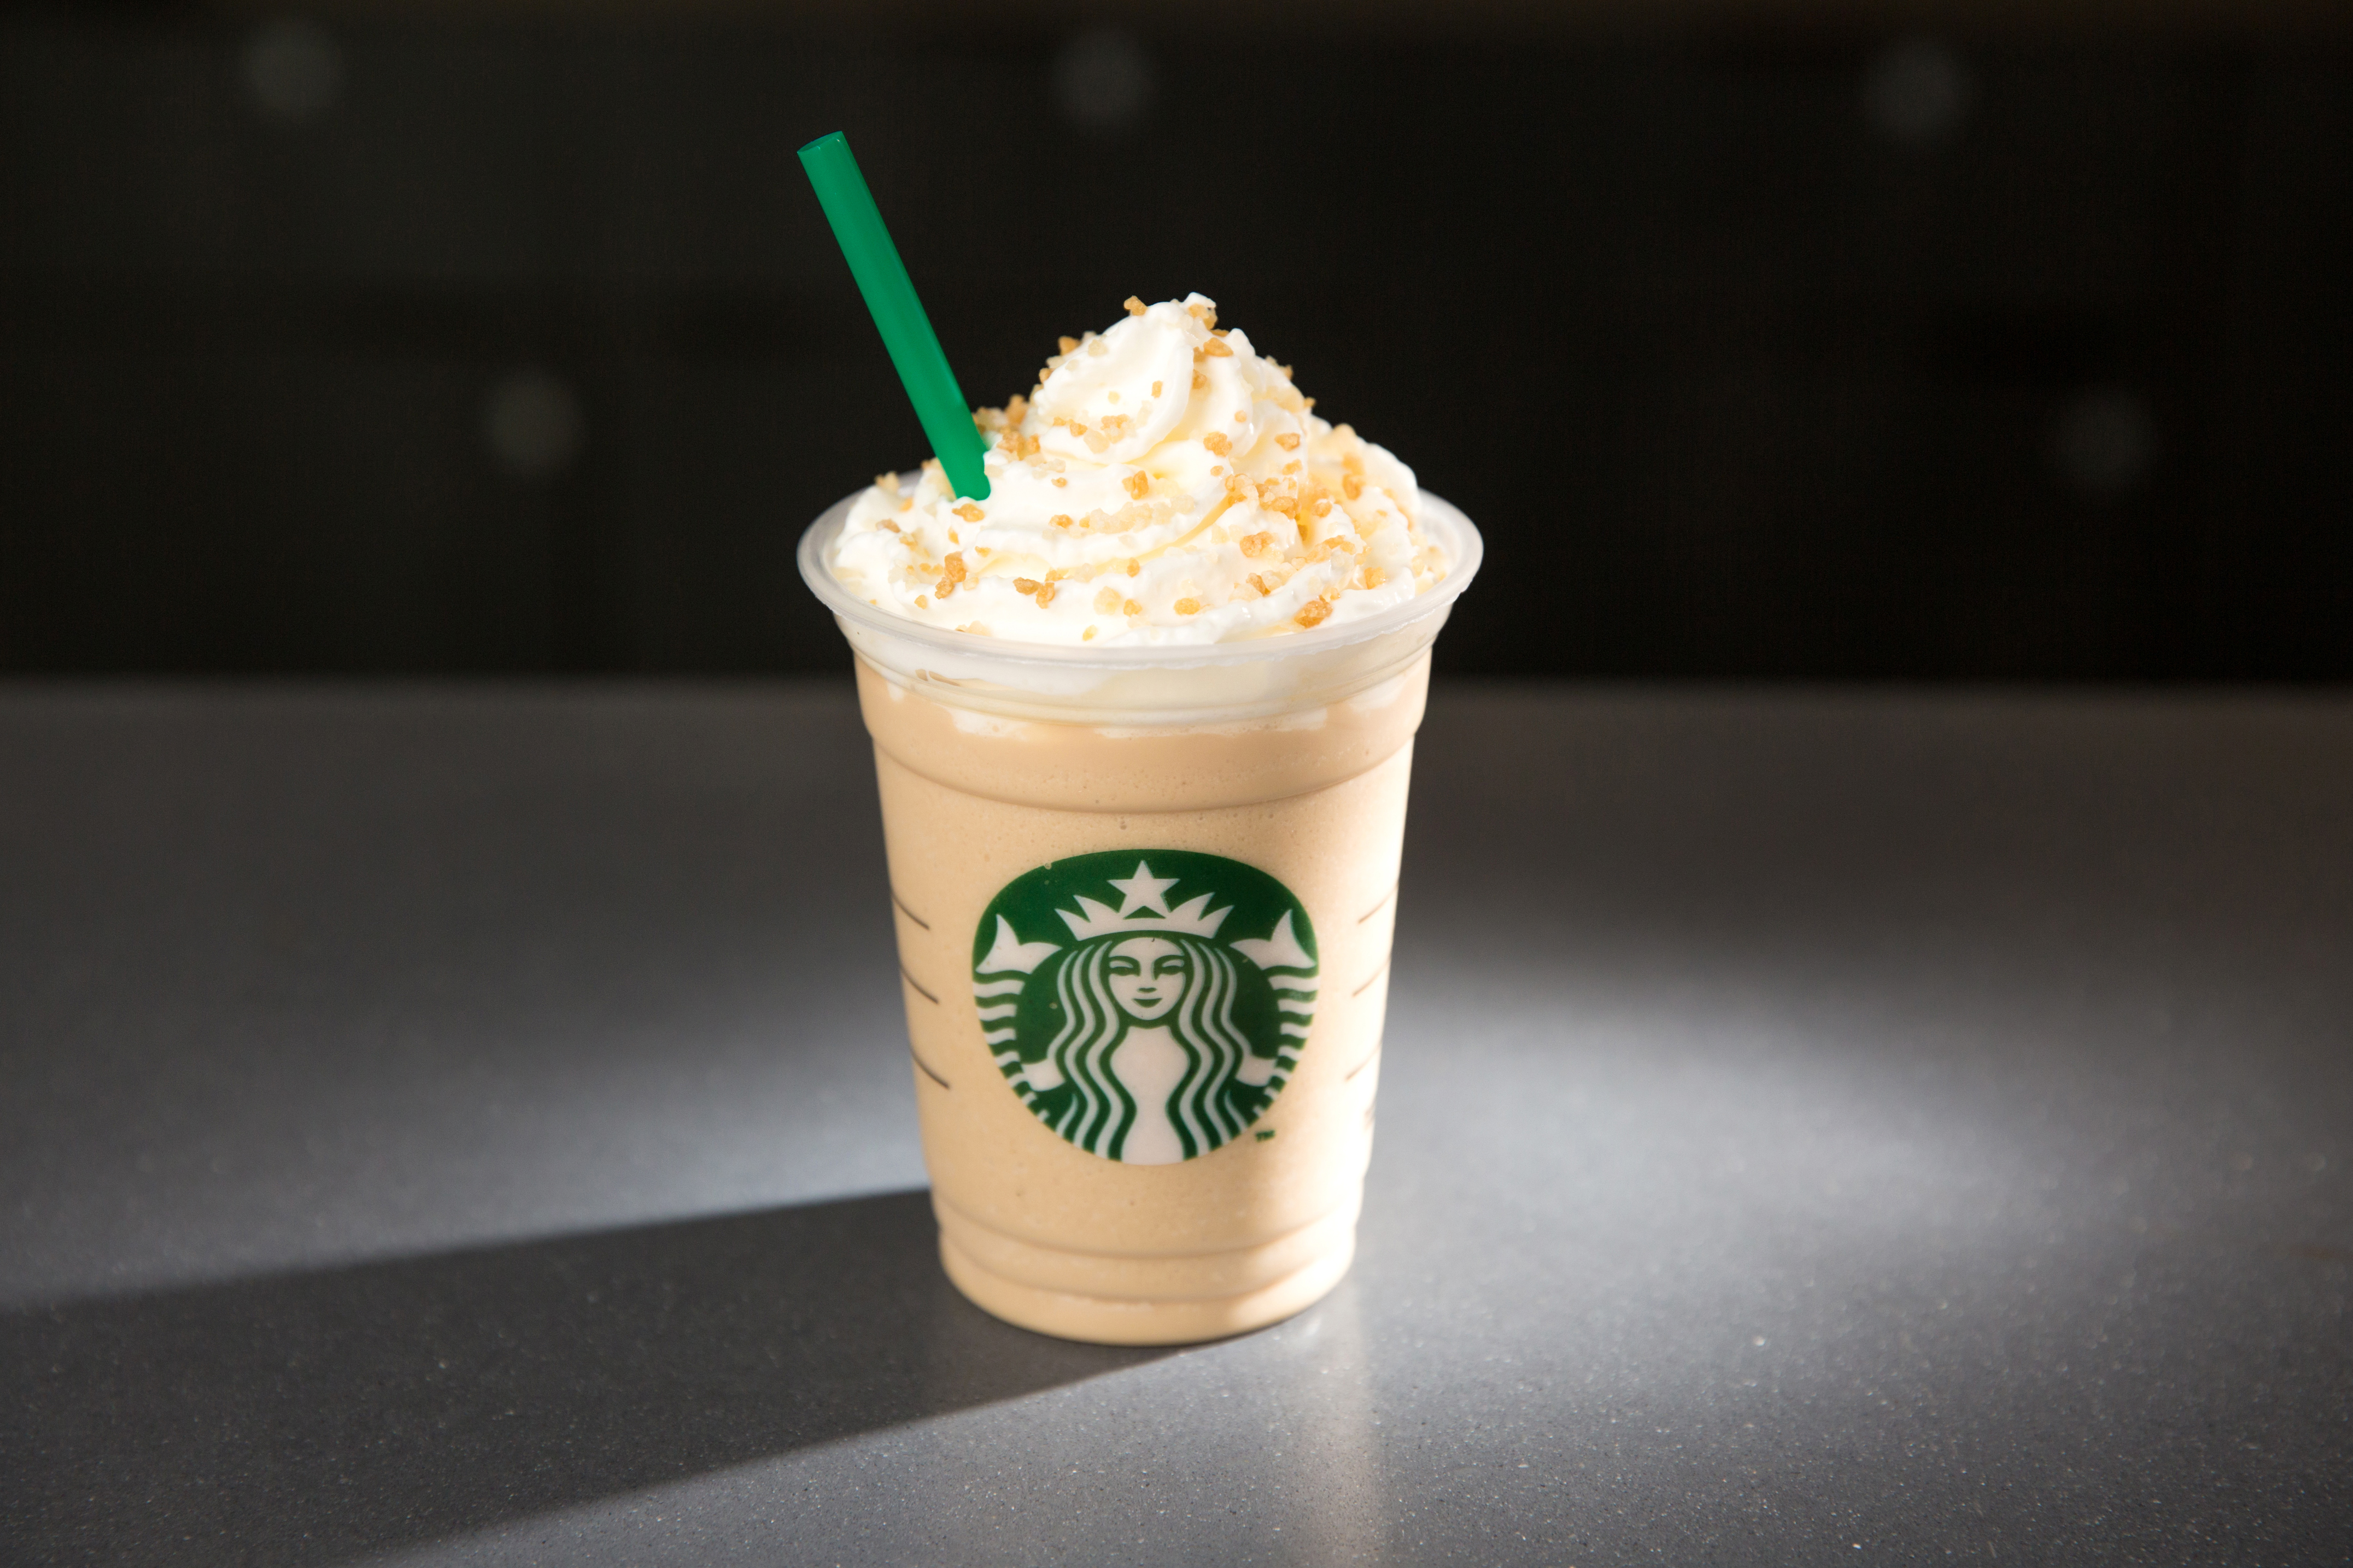 Delicious cream coffee from Starbucks - HD wallpaper.